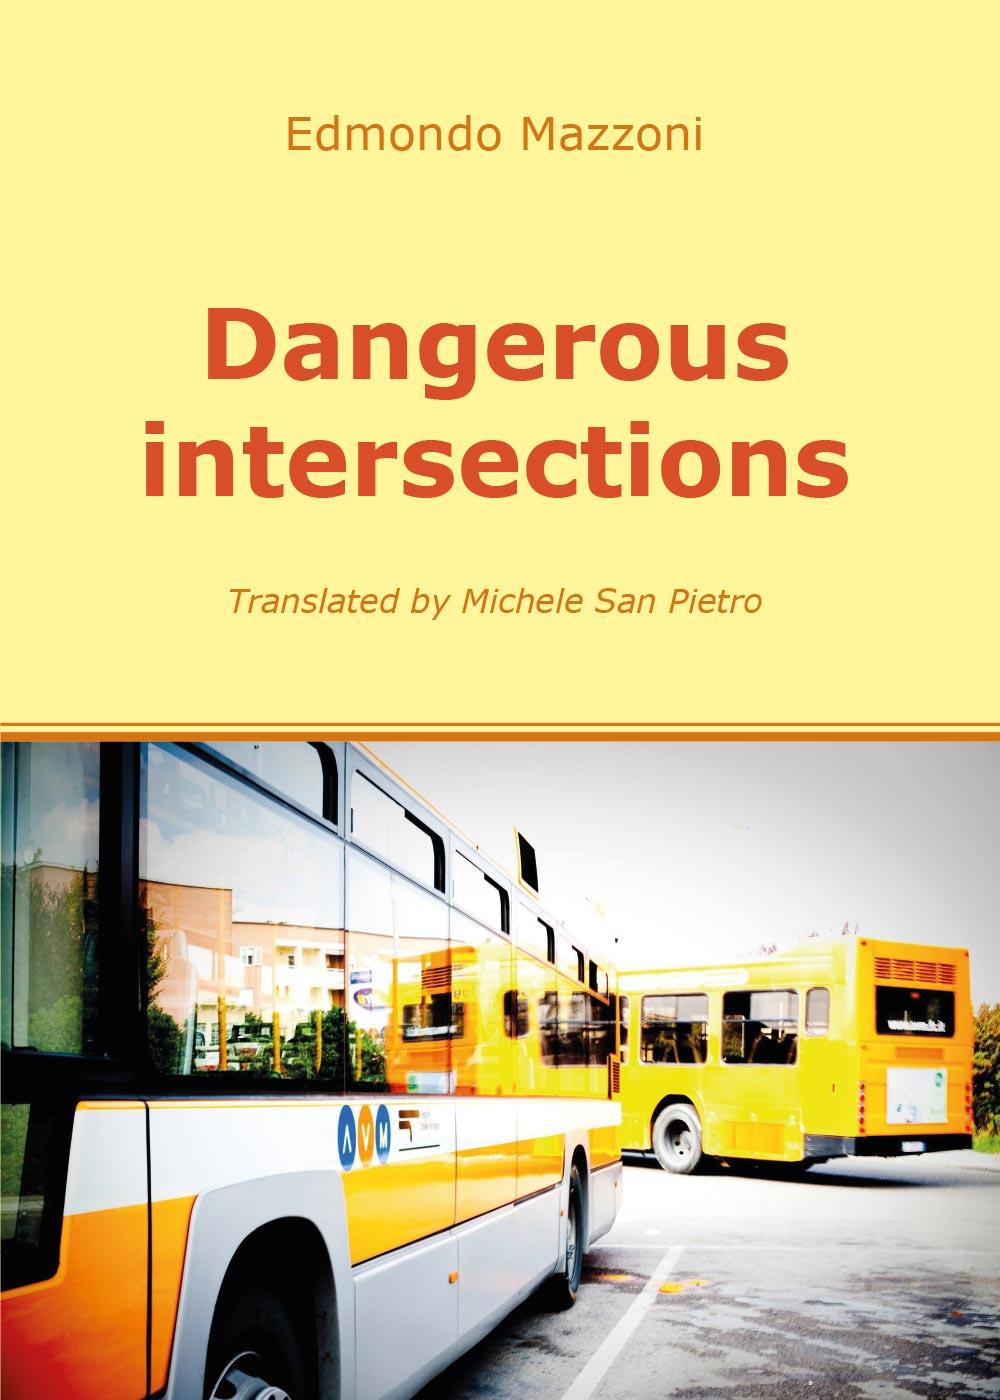 Dangerous intersections